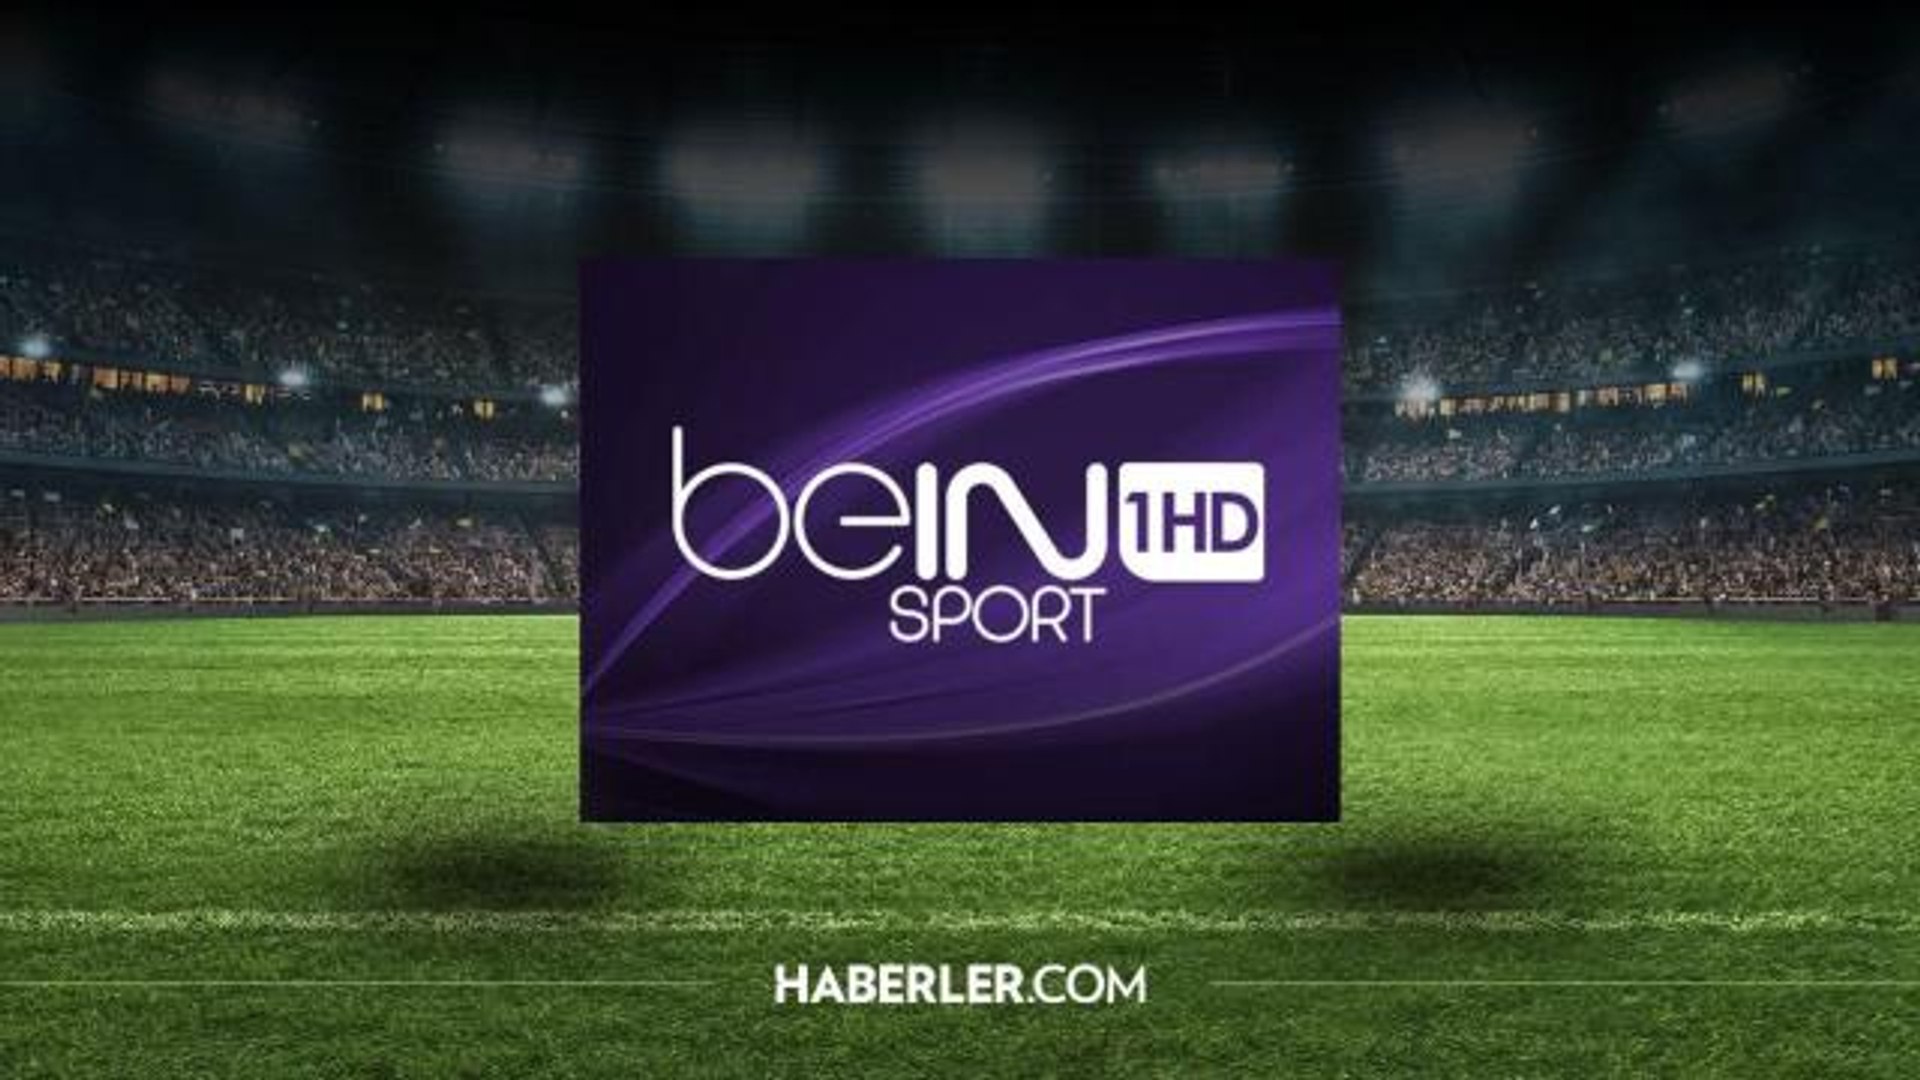 Bein Sports 1 canlı izle! M.Başakşehir - Kayserispor maçı canlı izle! Bein  Sports 1 canlı izleme linki! M.Başakşehir - Kayserispor maçı canlı izle! -  Dailymotion Video